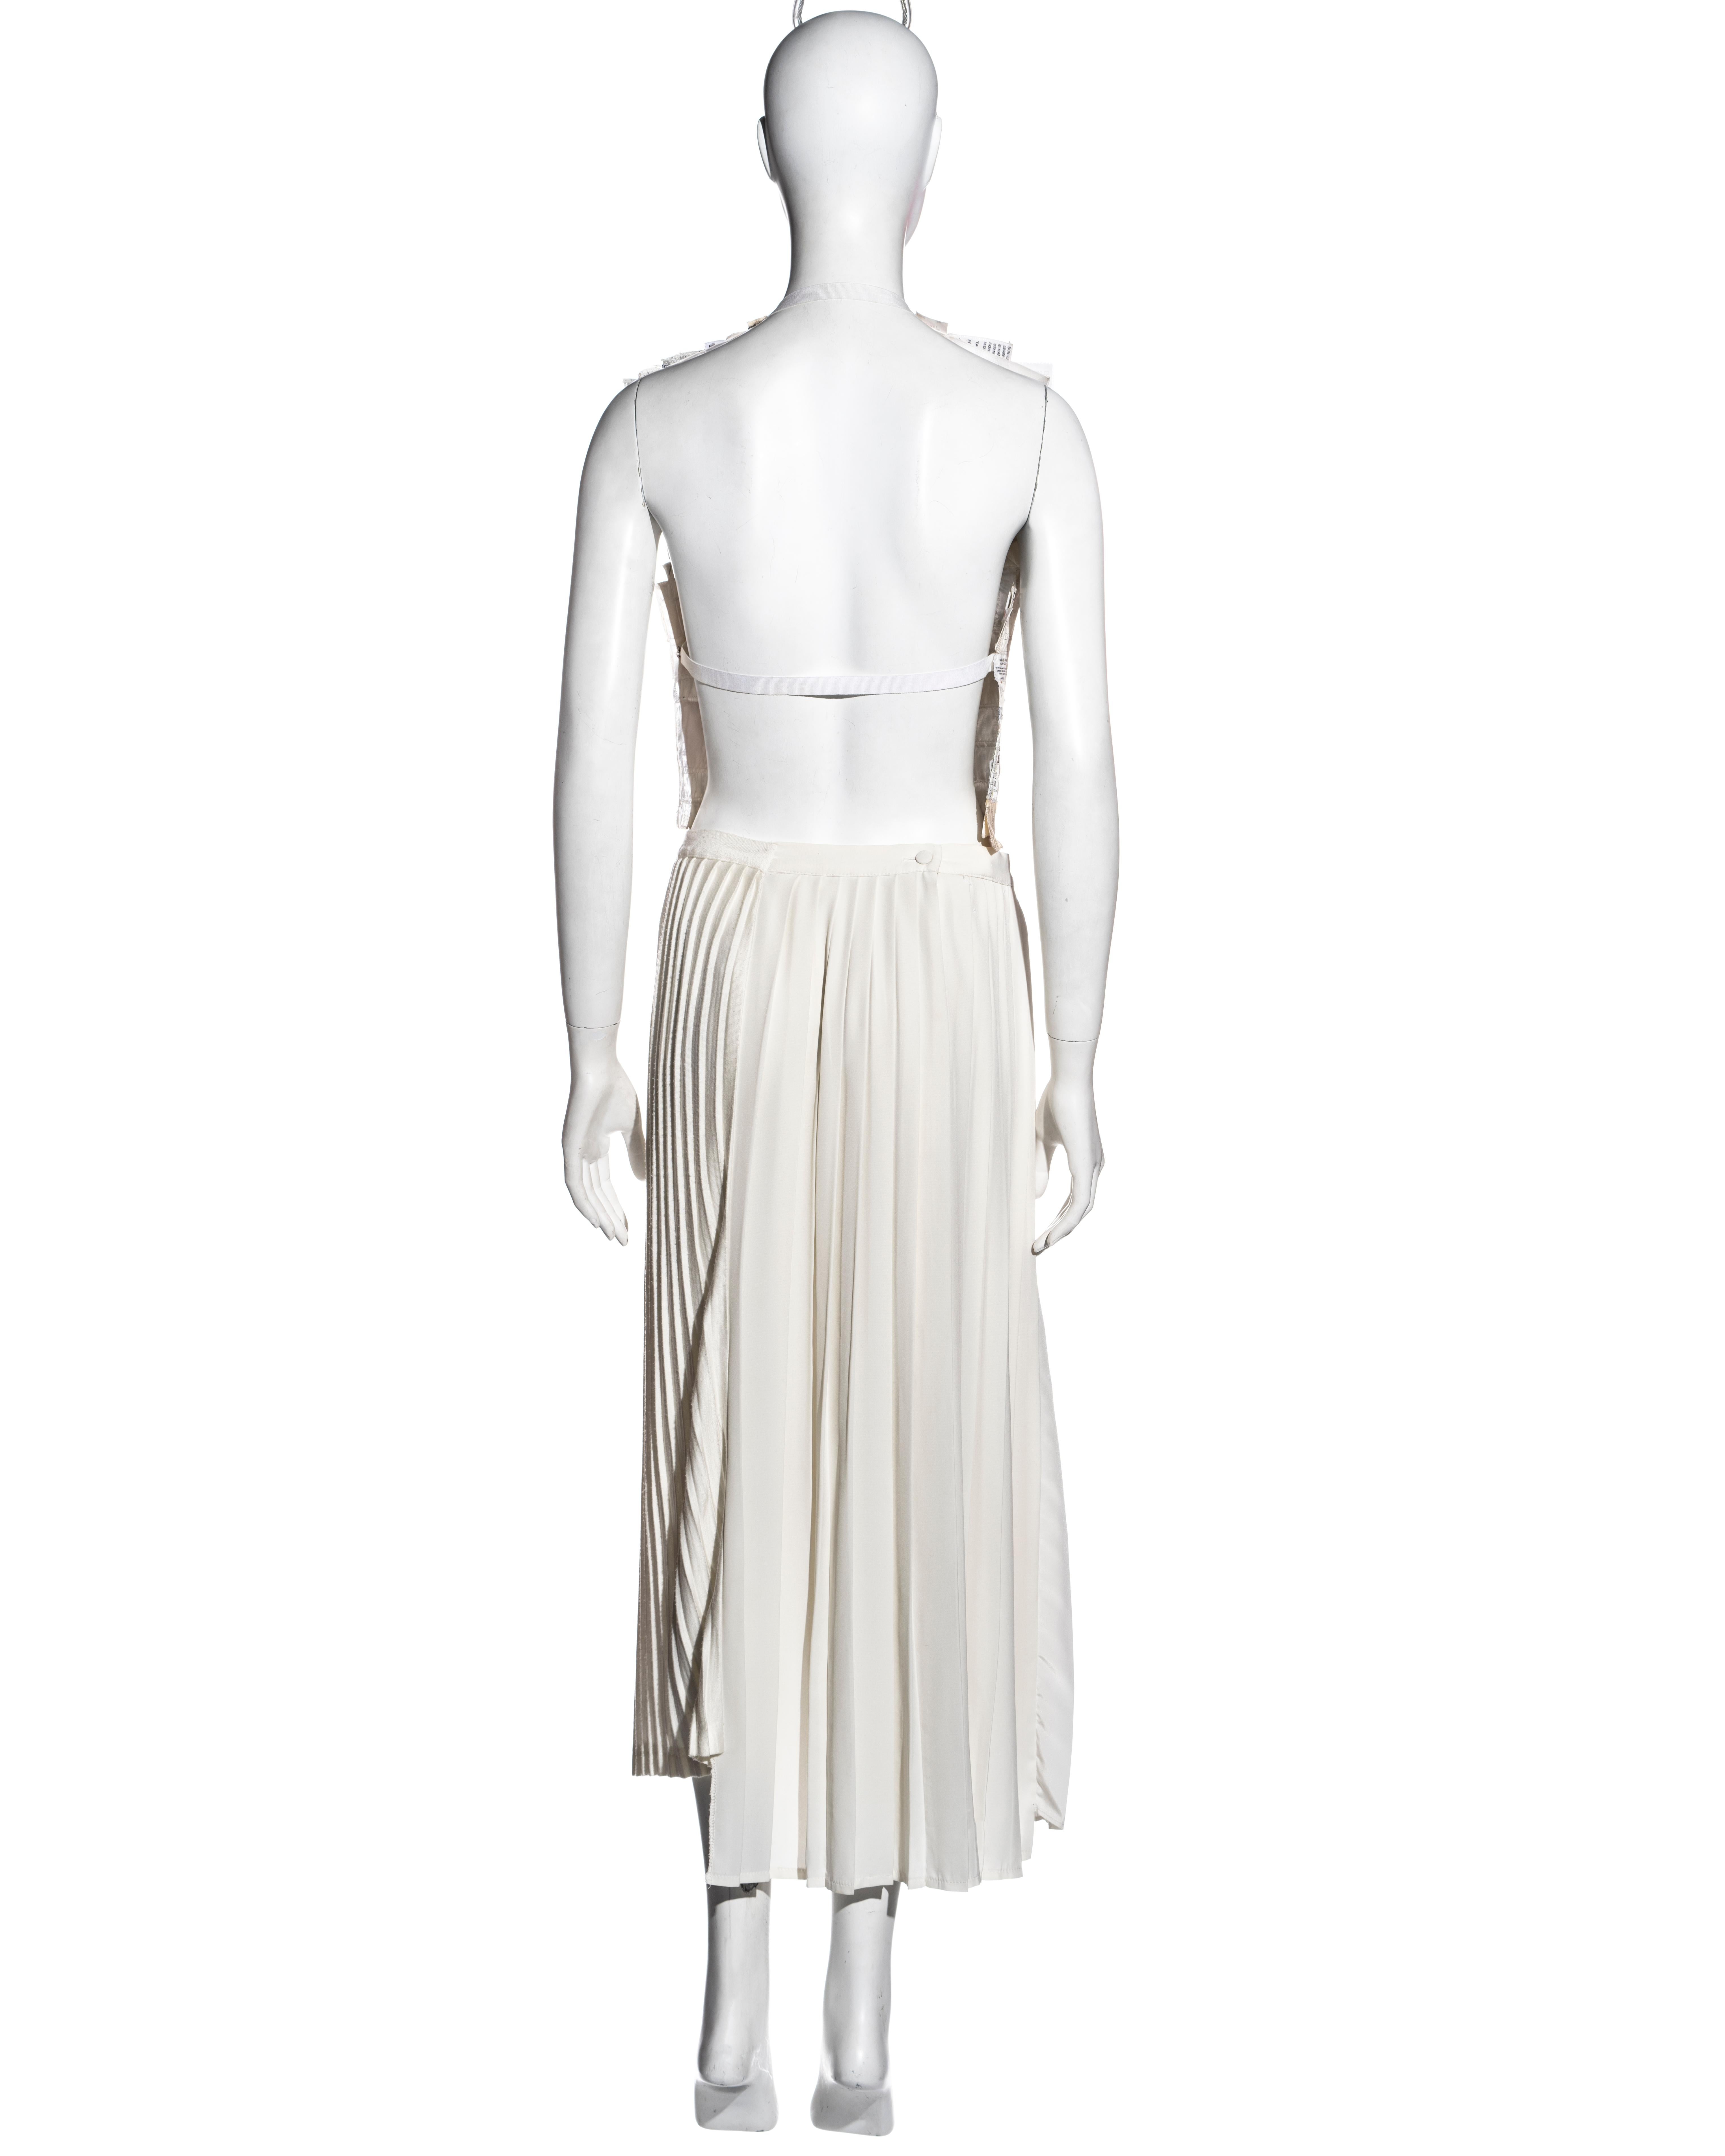 Martin Margiela artisanal shirt front and skirt runway ensemble, ss 2001 7